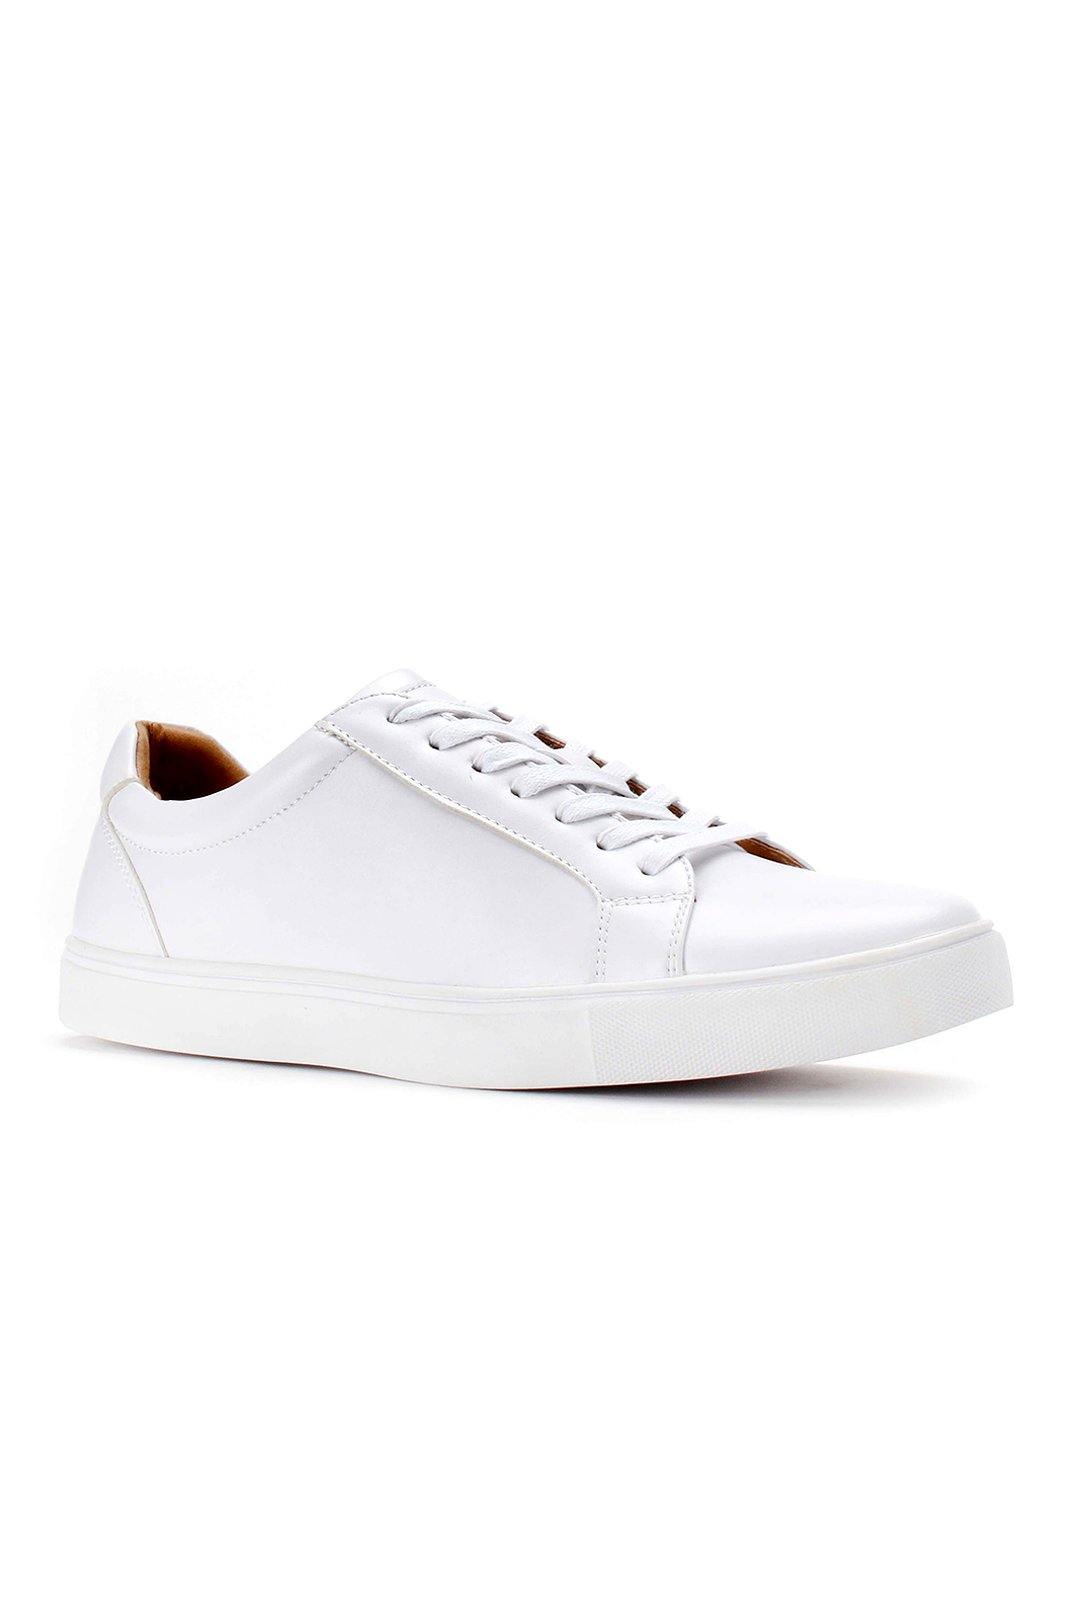 Jaxson White Low Top Sneaker - Identity Boutique